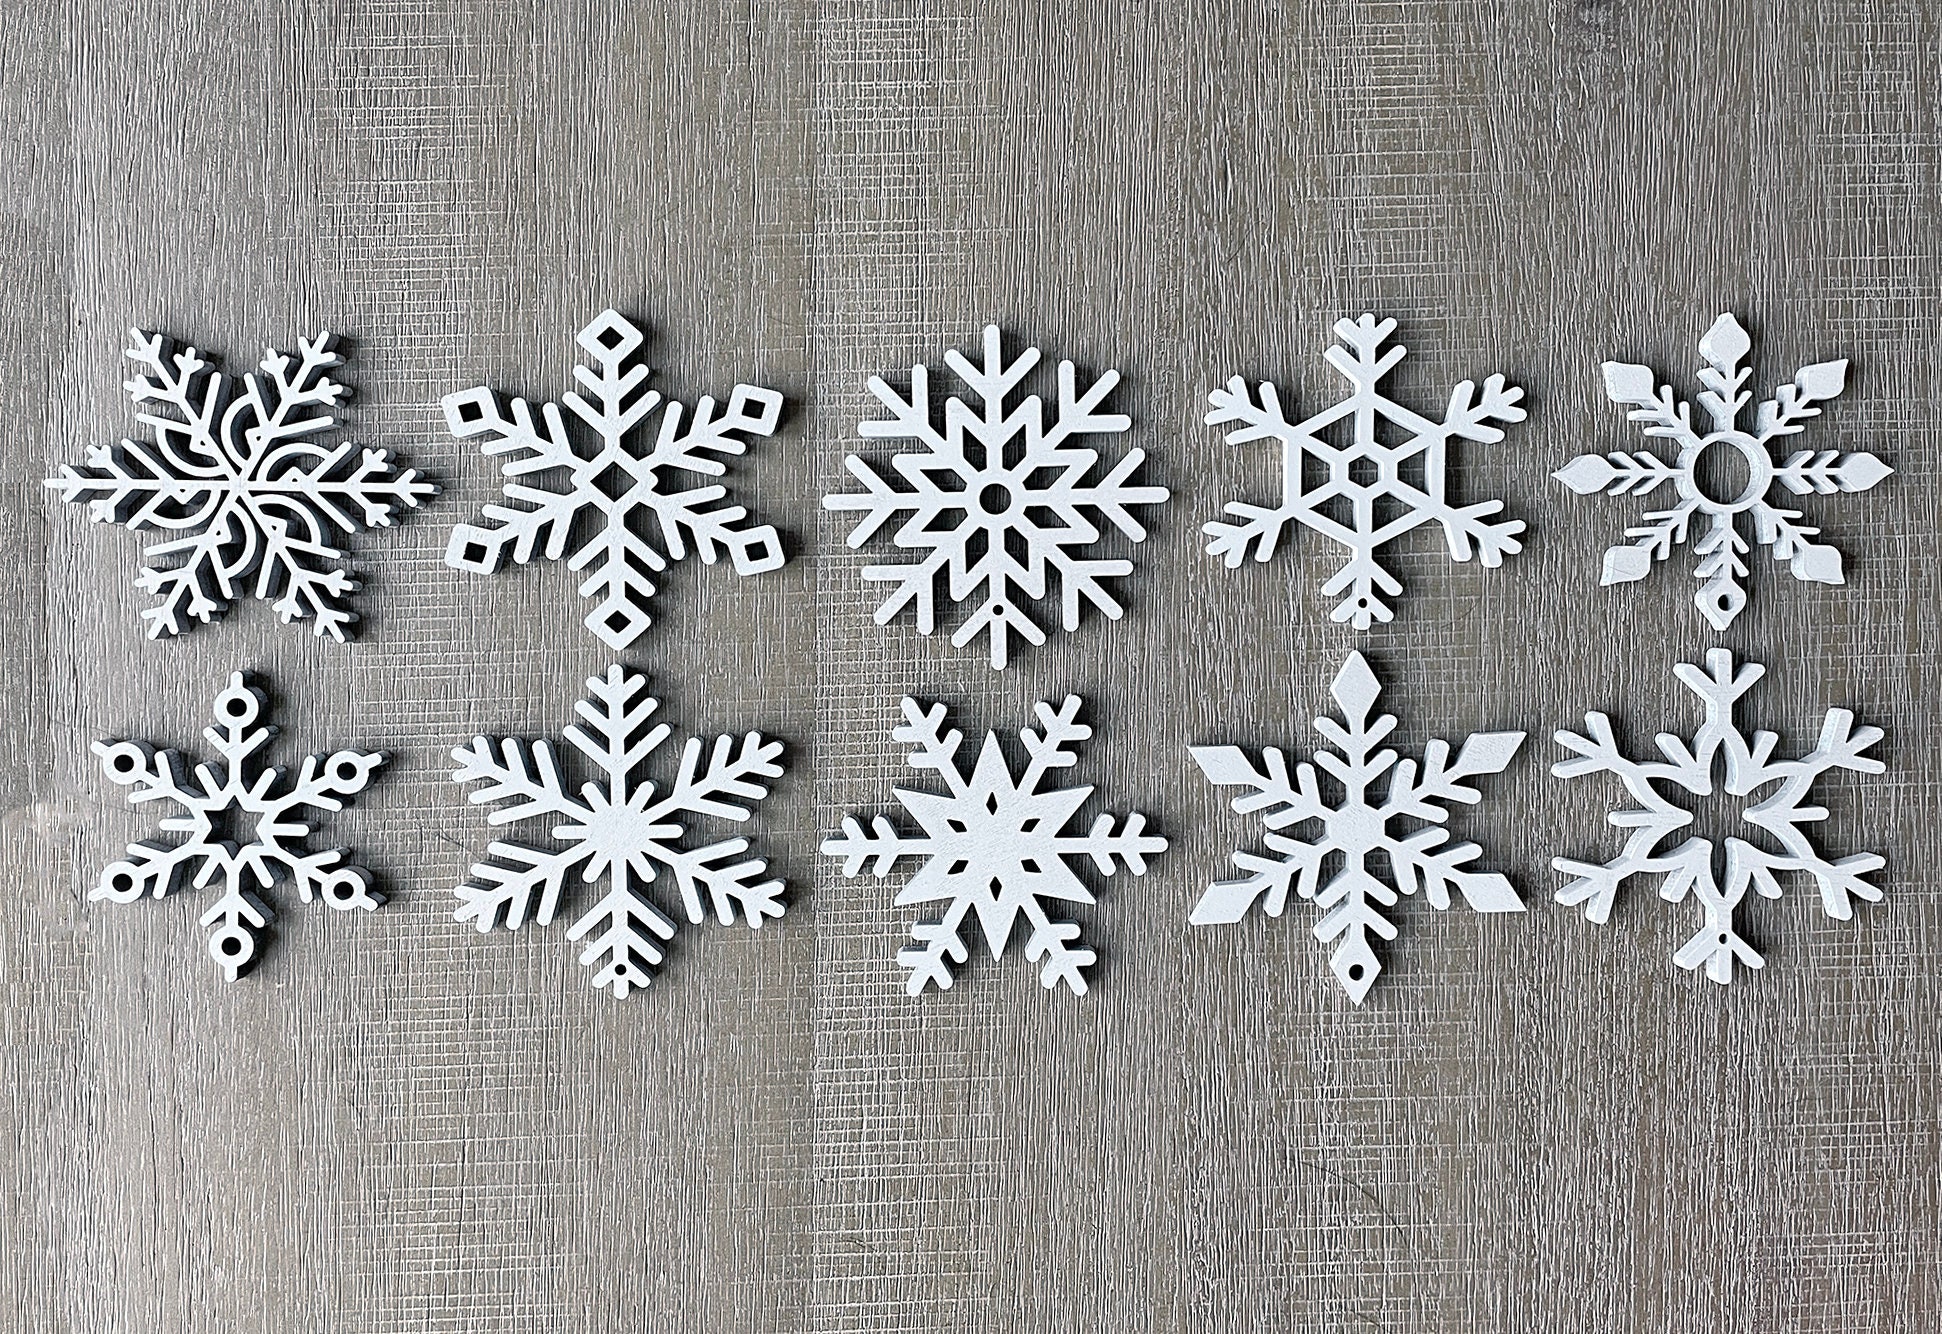 Silver Snowflakes - Asst Sized Snowflake Ornaments - 12 each of 4 inch - 5  inch - 6 inch - Silver Glitter Snowflake